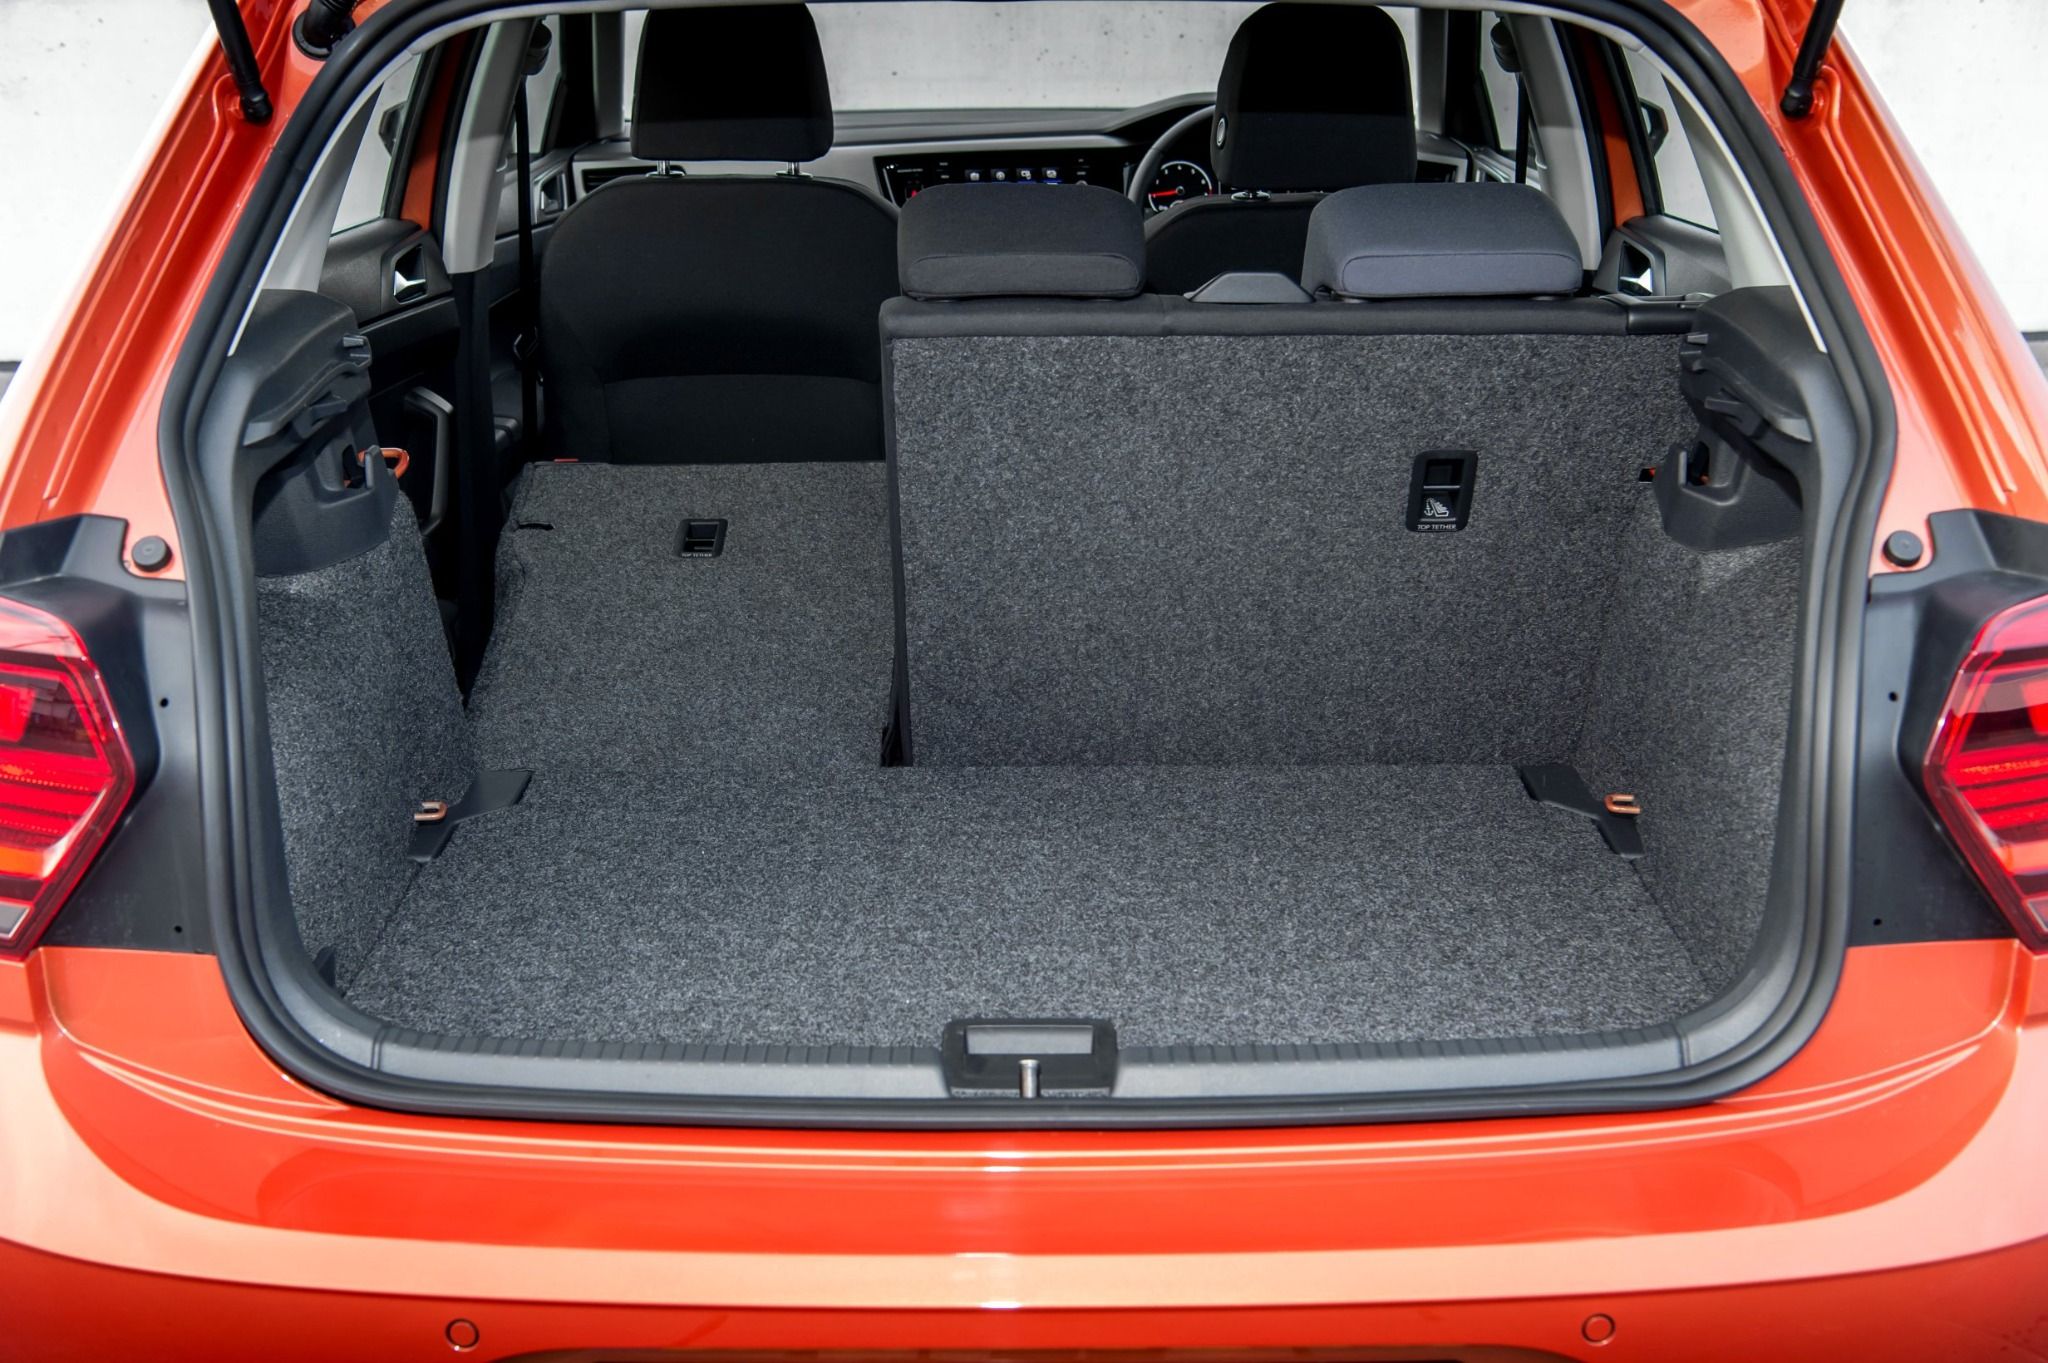 VW Polo SE Boot Space